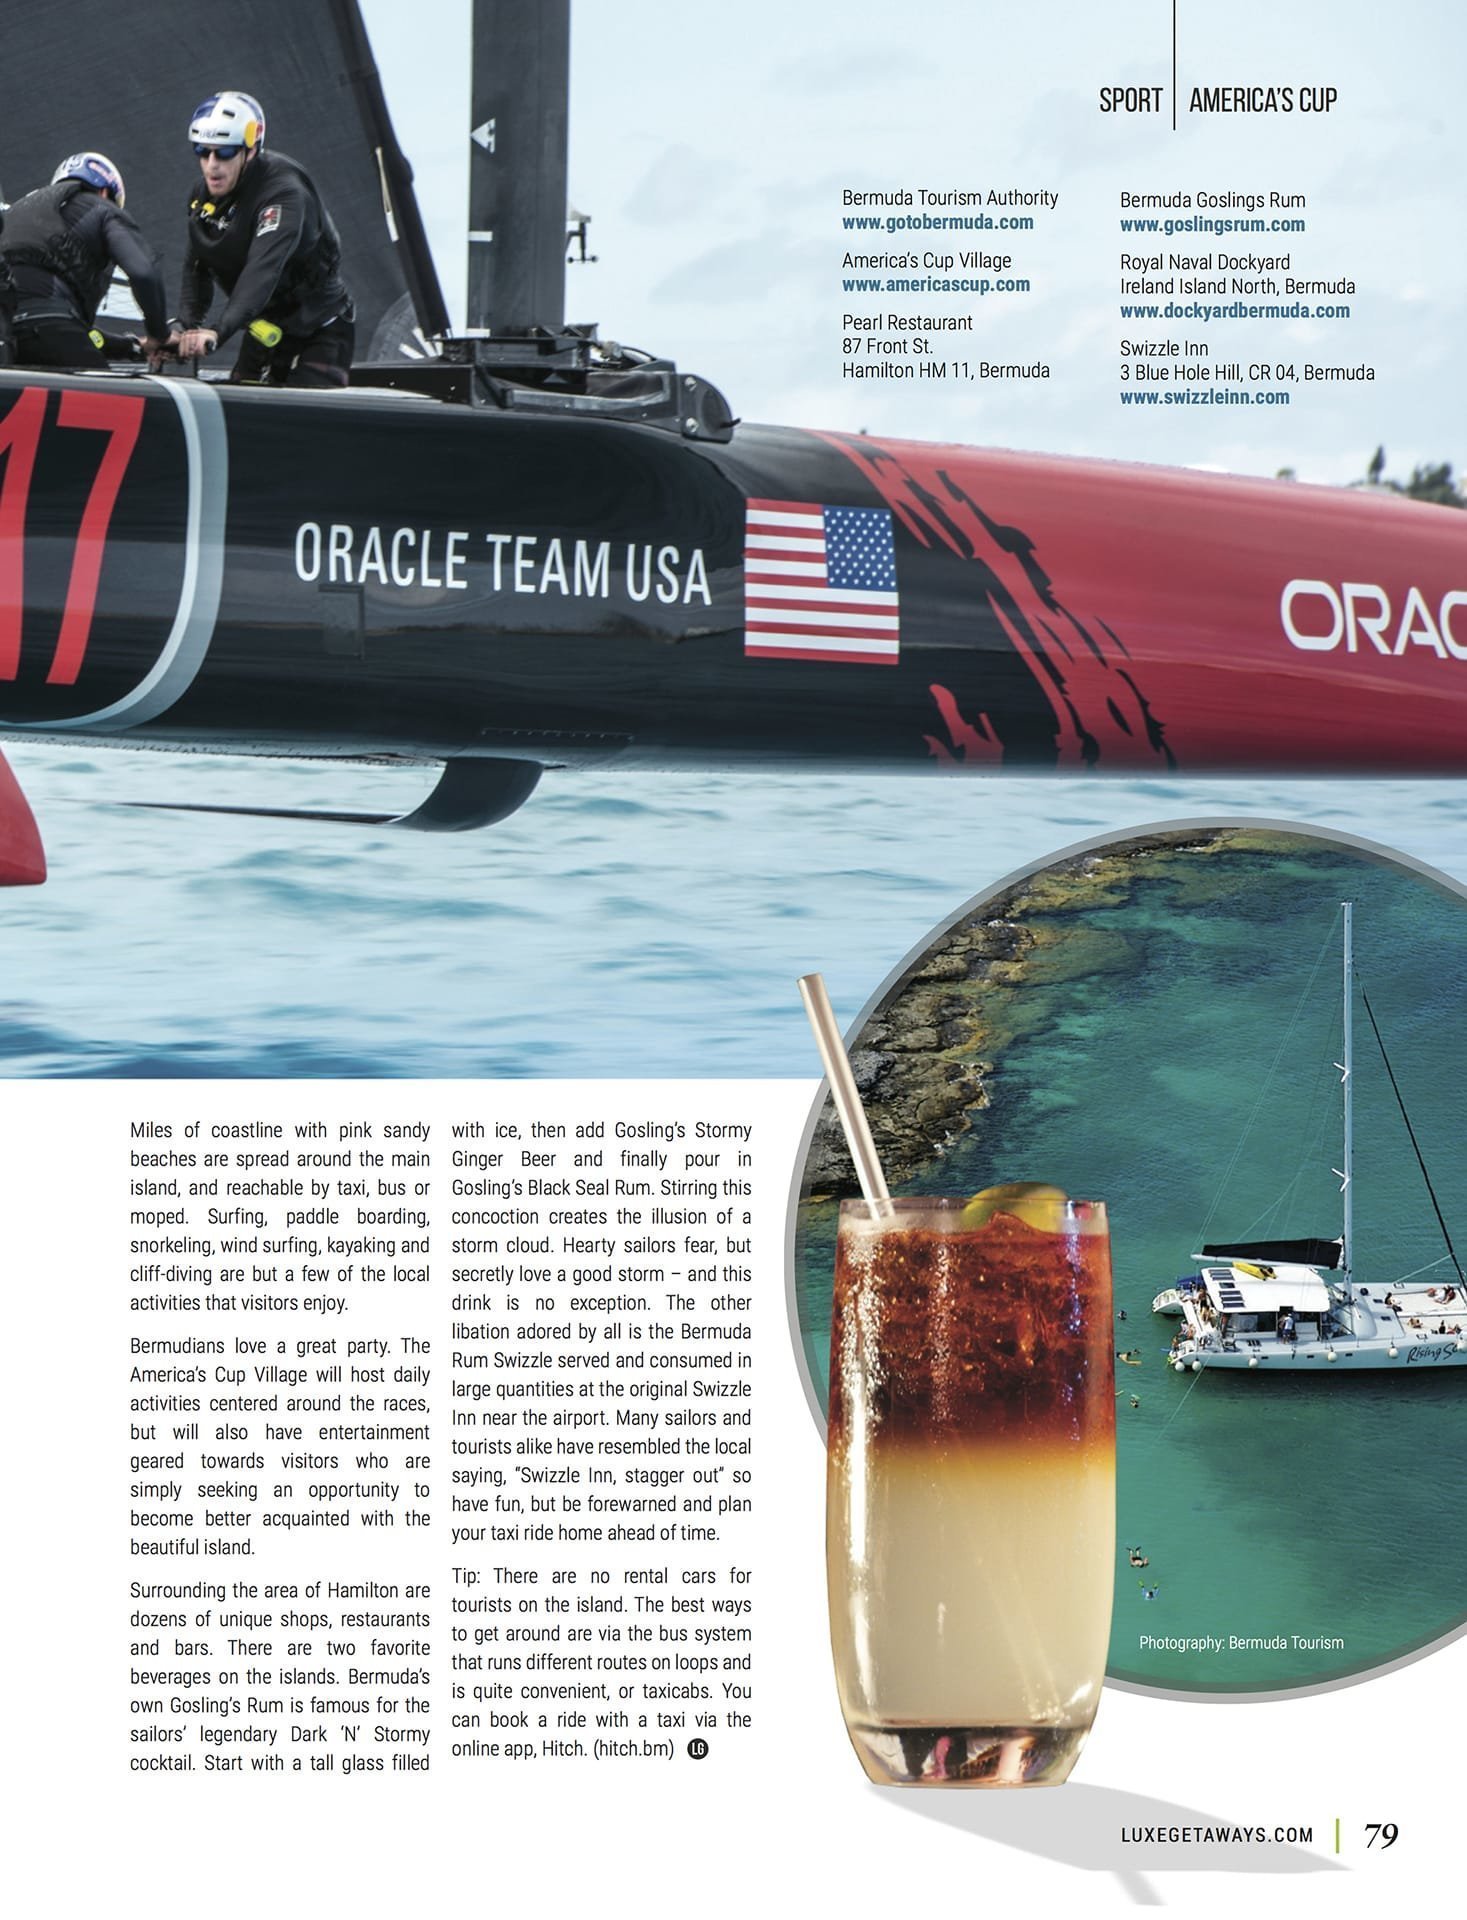 LuxeGetaways - Luxury Travel - Luxury Travel Magazine - Bermuda Tourism - America's Cup - Oracle Team USA